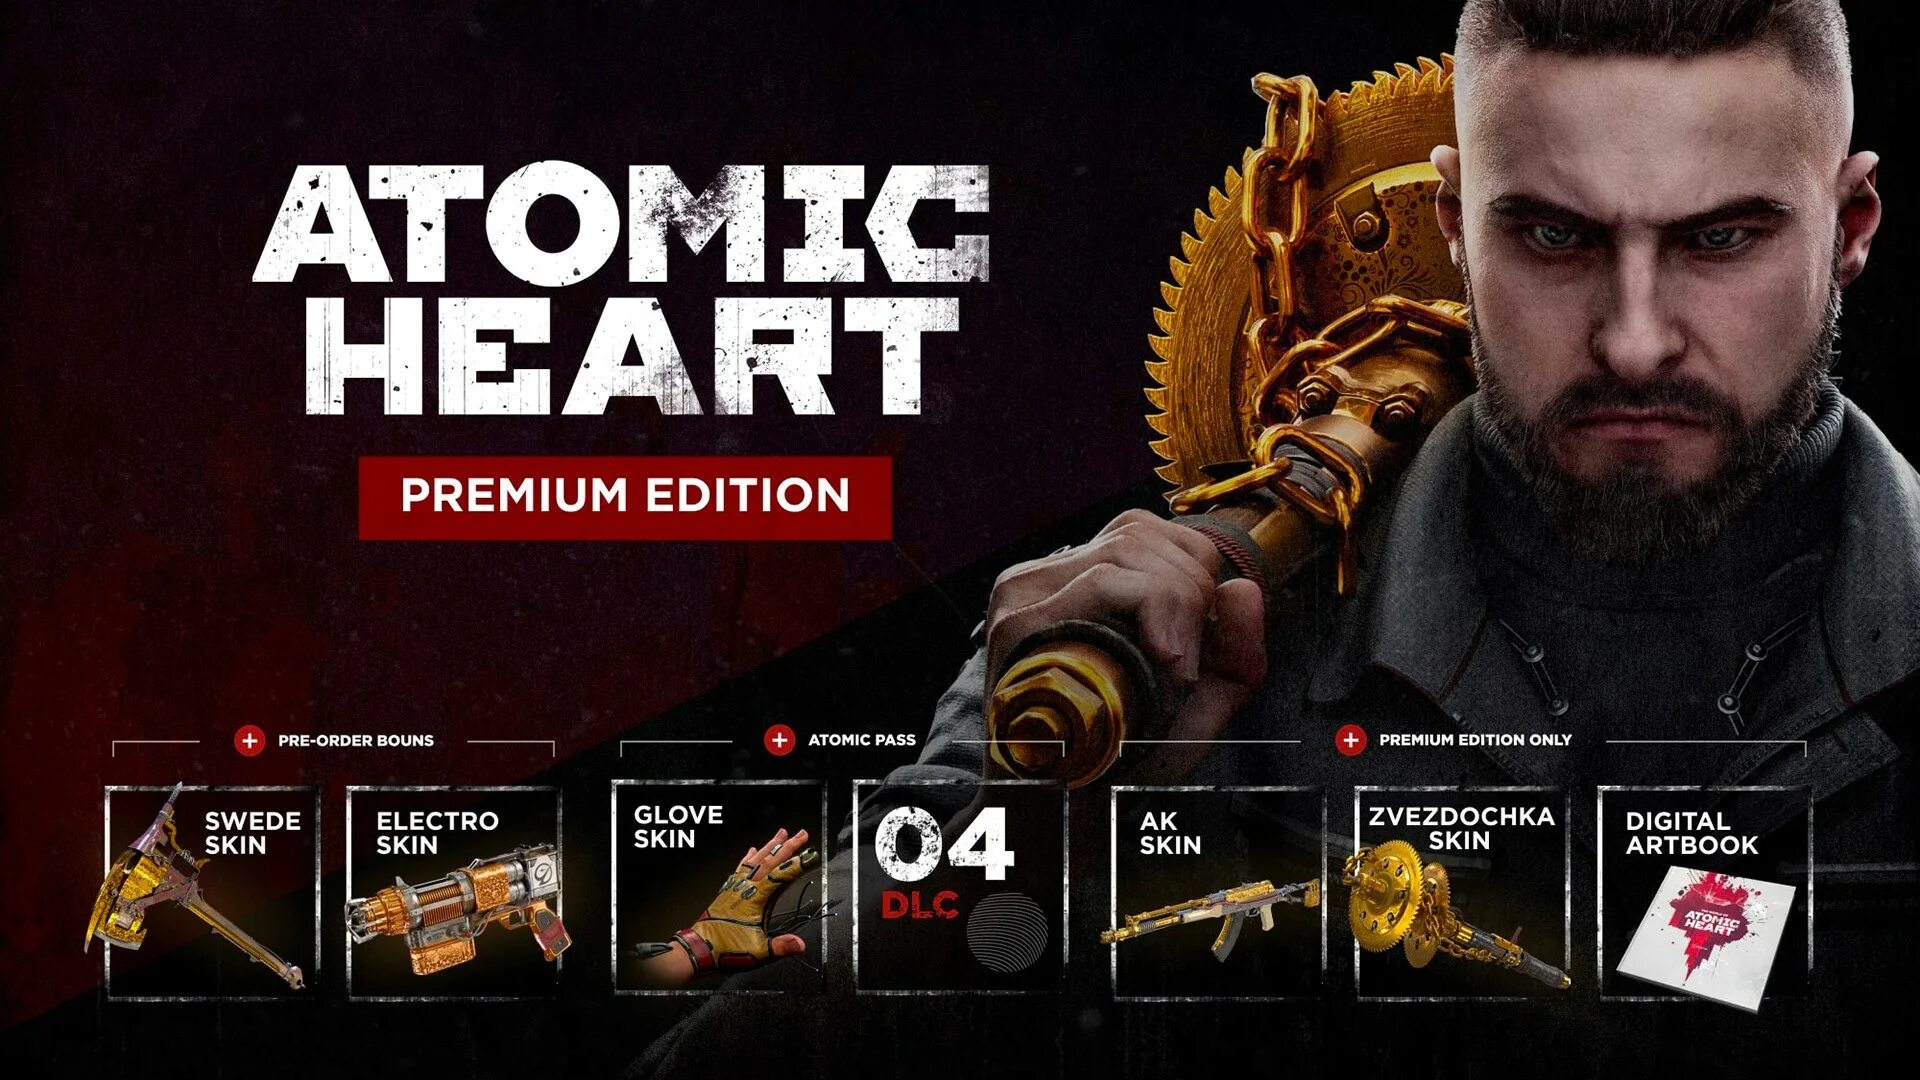 Атомик харт 3 длс дата. Атомик Харт премиум. Игра Atomic Heart Premium. Atomic Heart премиум издание.